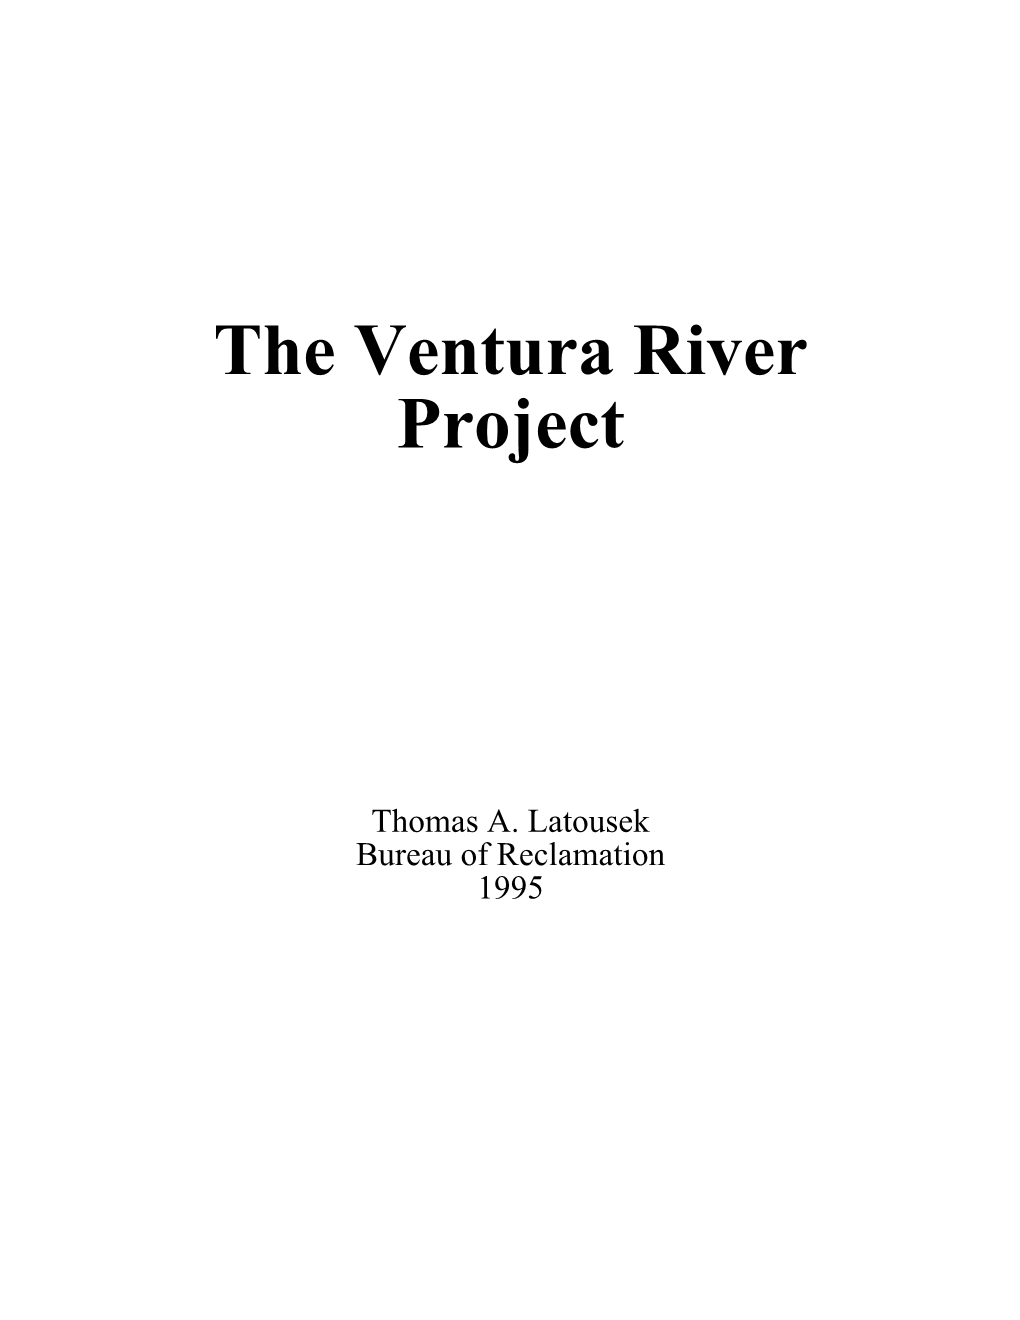 Ventura River Project History